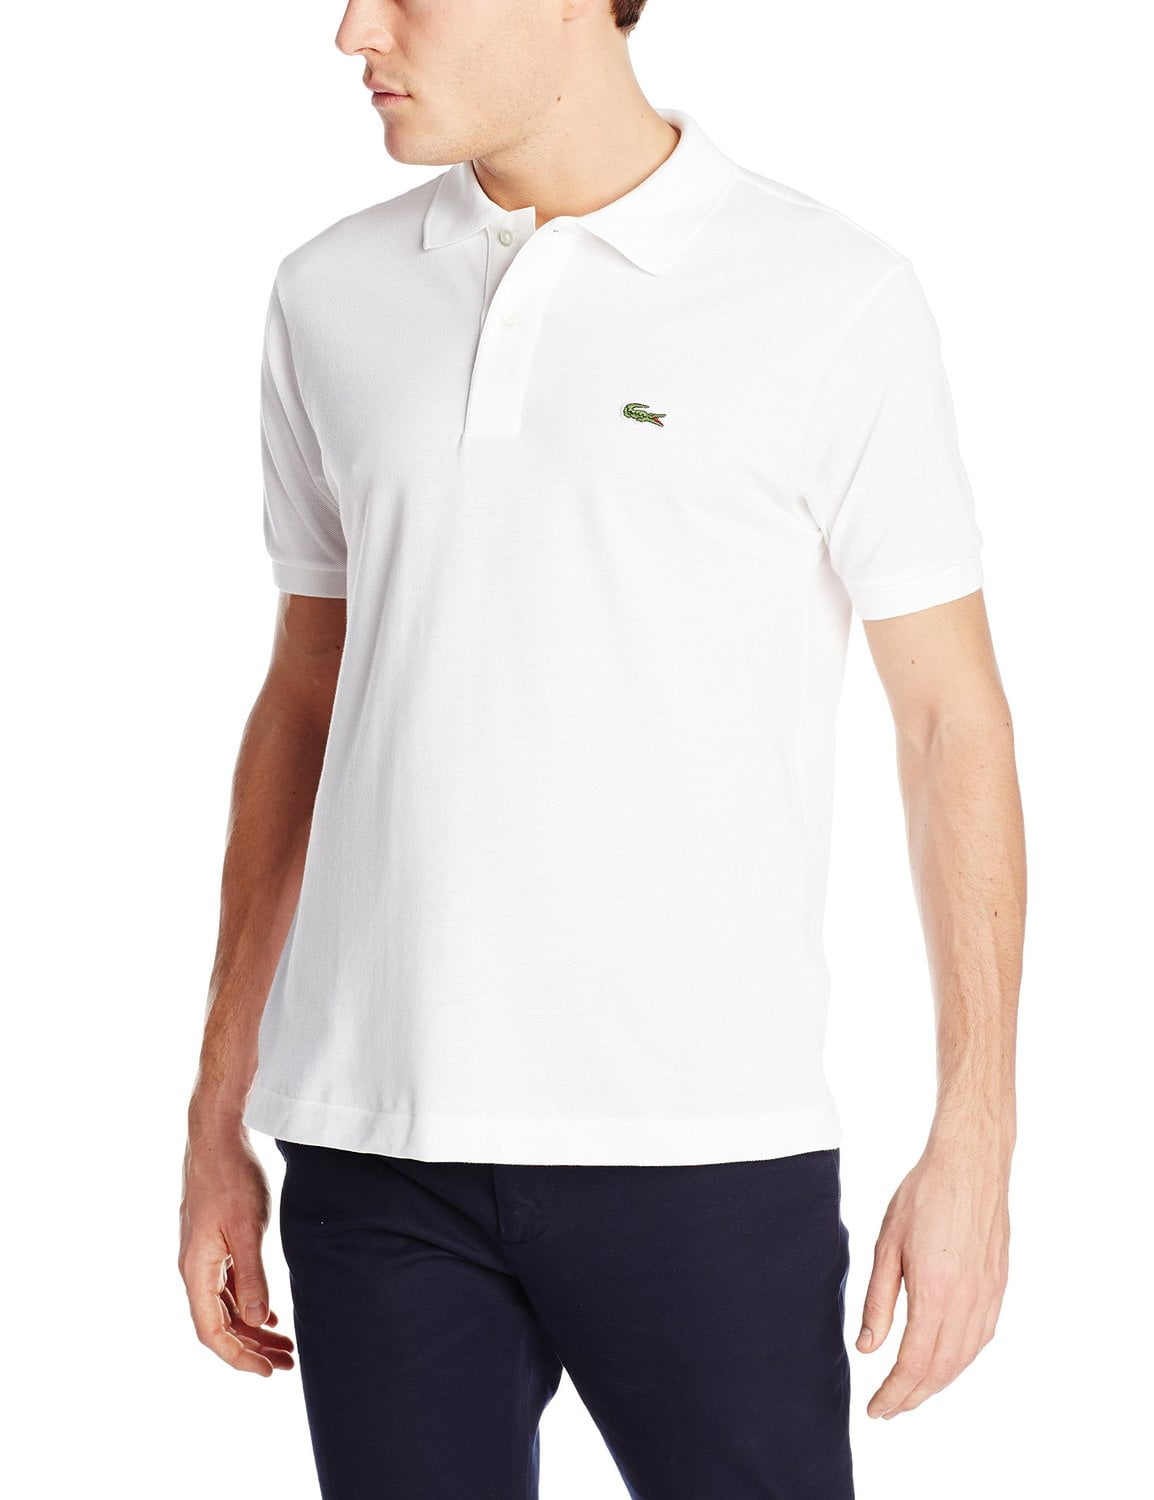 Lacoste Short Sleeve Classic Pique Polo Shirt Bailloux 5 (LG